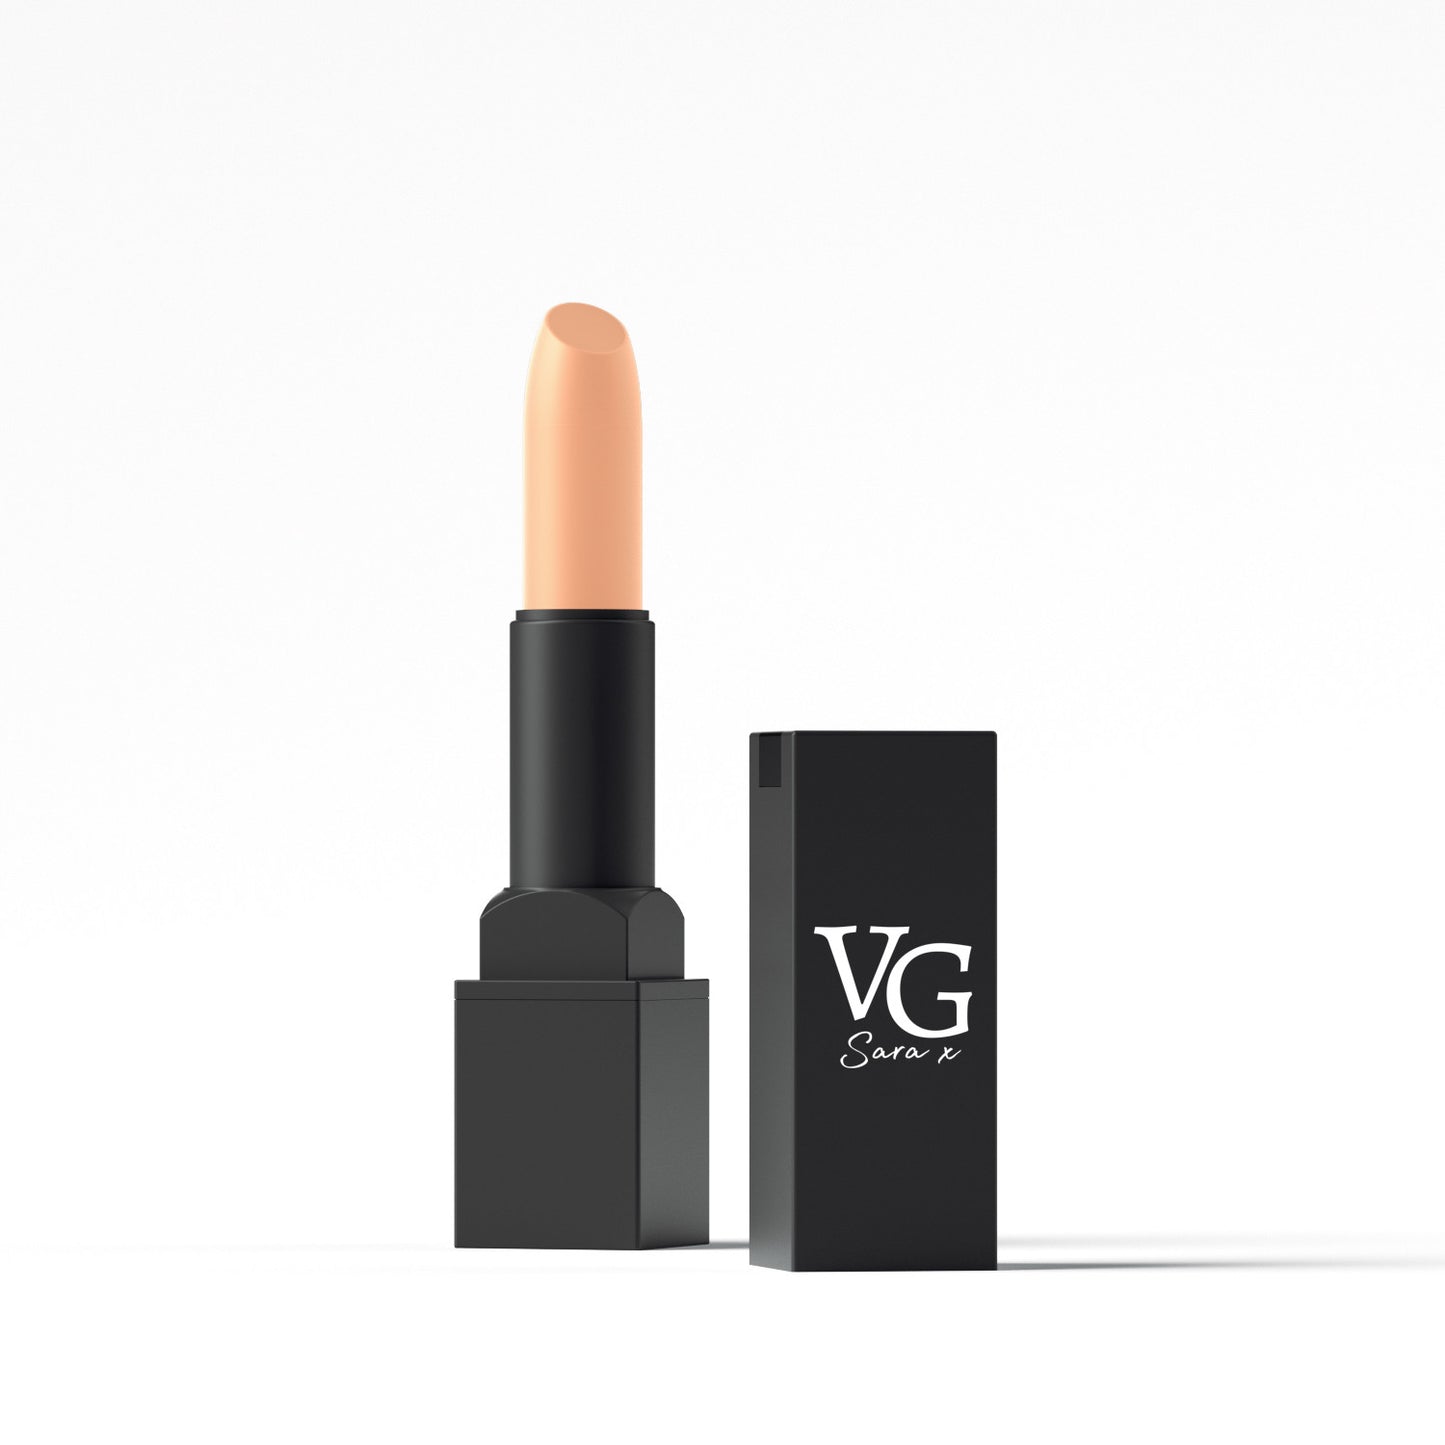 VG Sara x logo imprinted on Vitamin E enriched lipstick